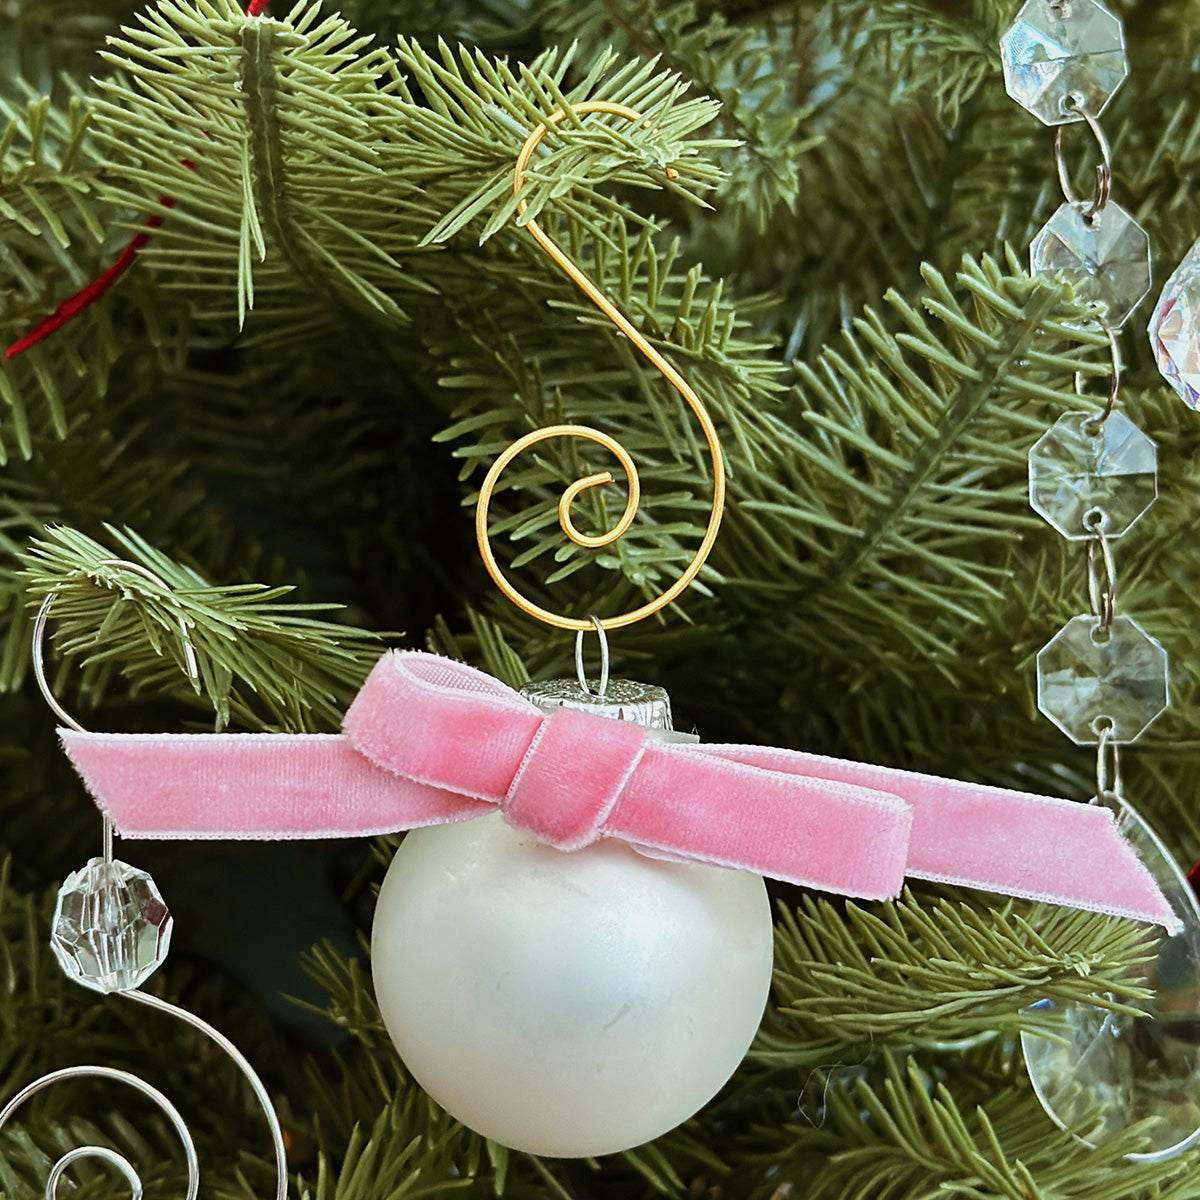 Wrapables Christmas Tree Ornament Hooks, S-Shaped Swirl Hooks for Hang